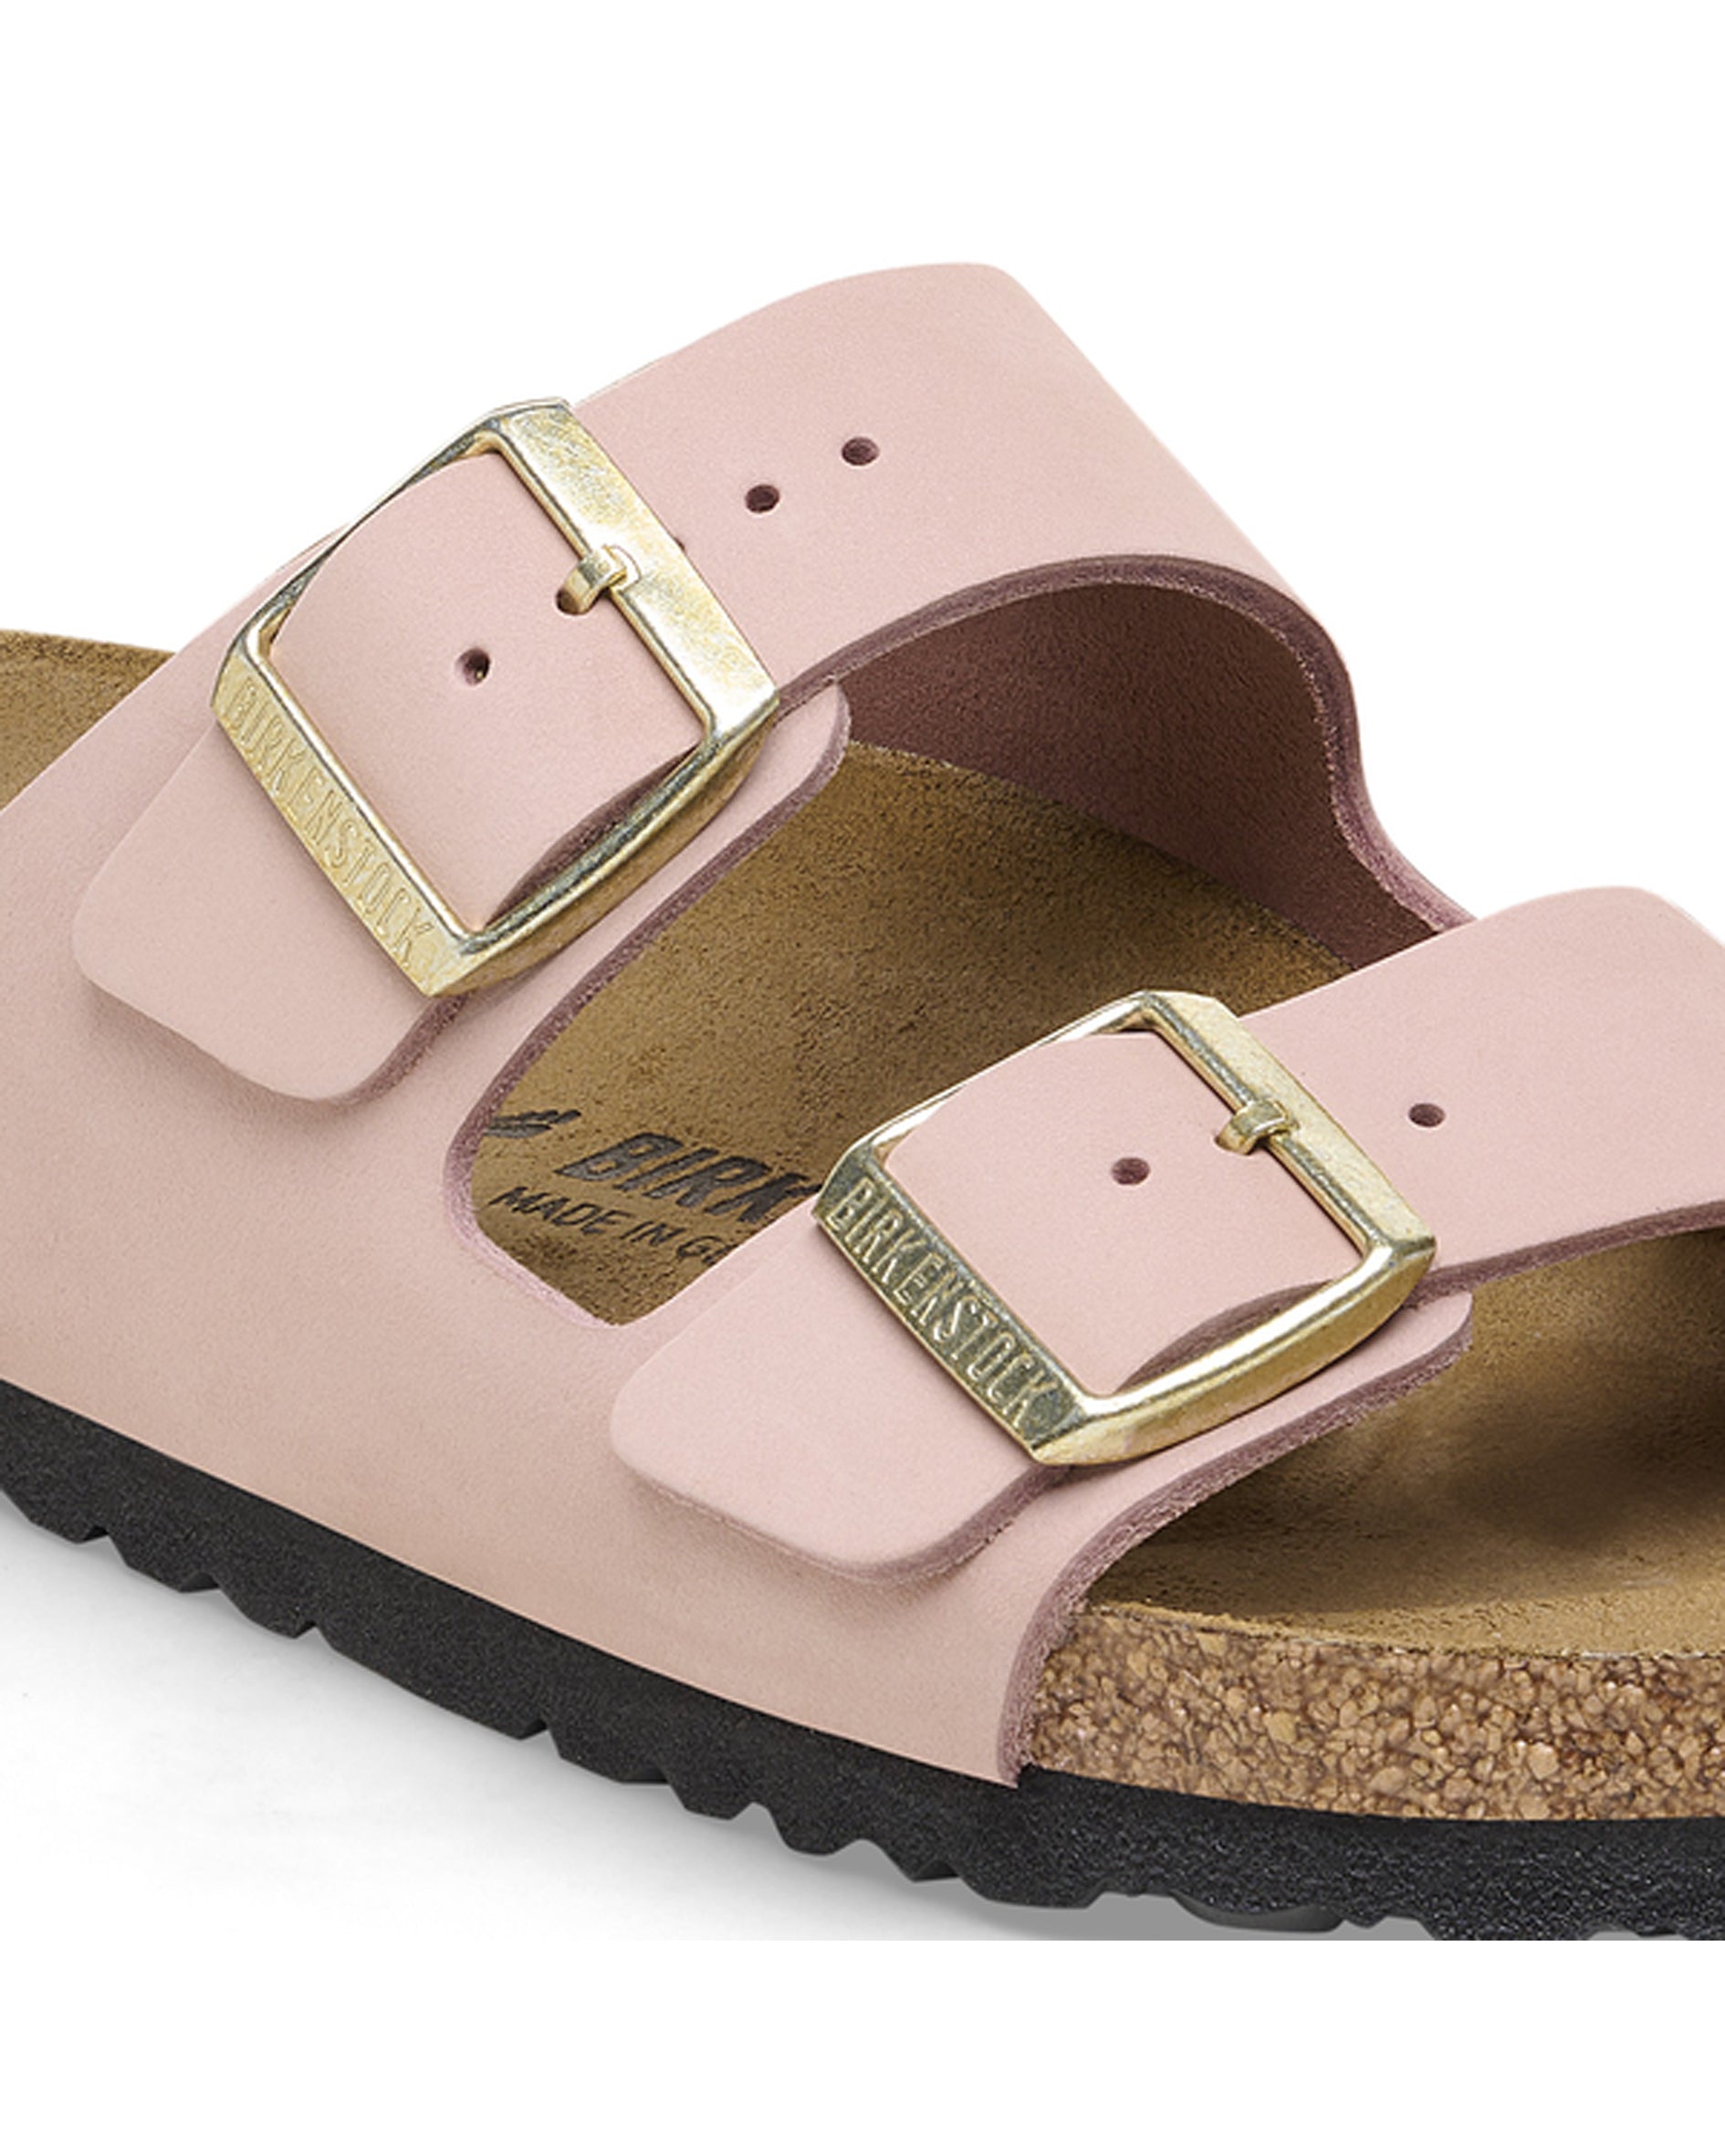 Arizona Soft Pink Nubuck Leather Sandals